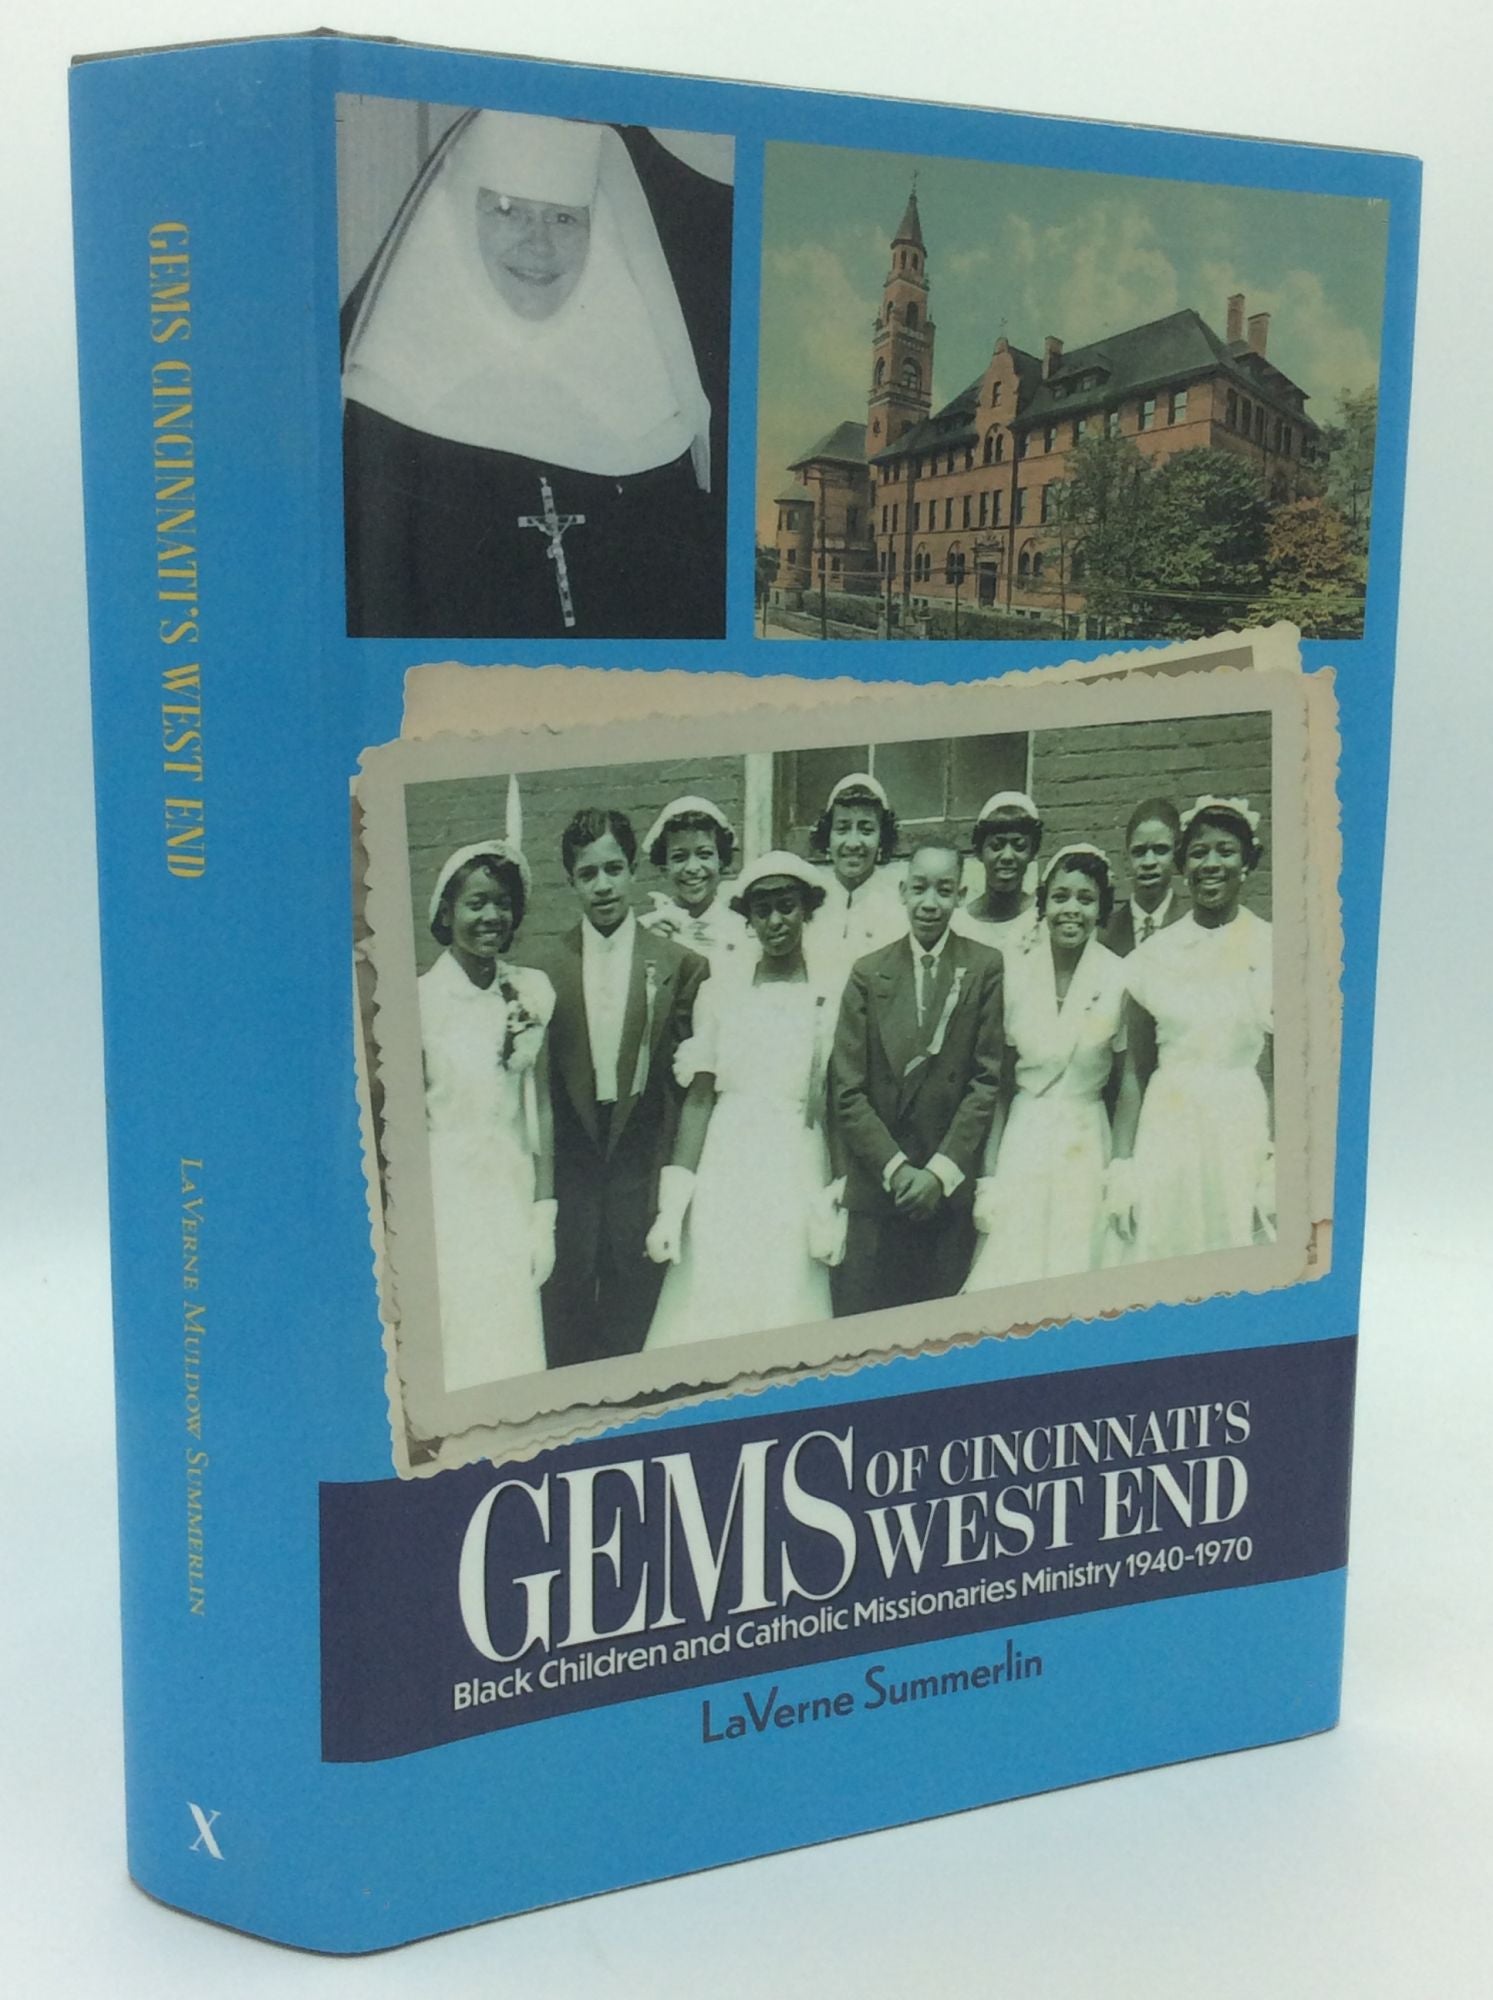 LaVerne Muldow Summerlin - Gems of Cincinnati's West End: Black Children and Catholic Missionaries 1940-1970